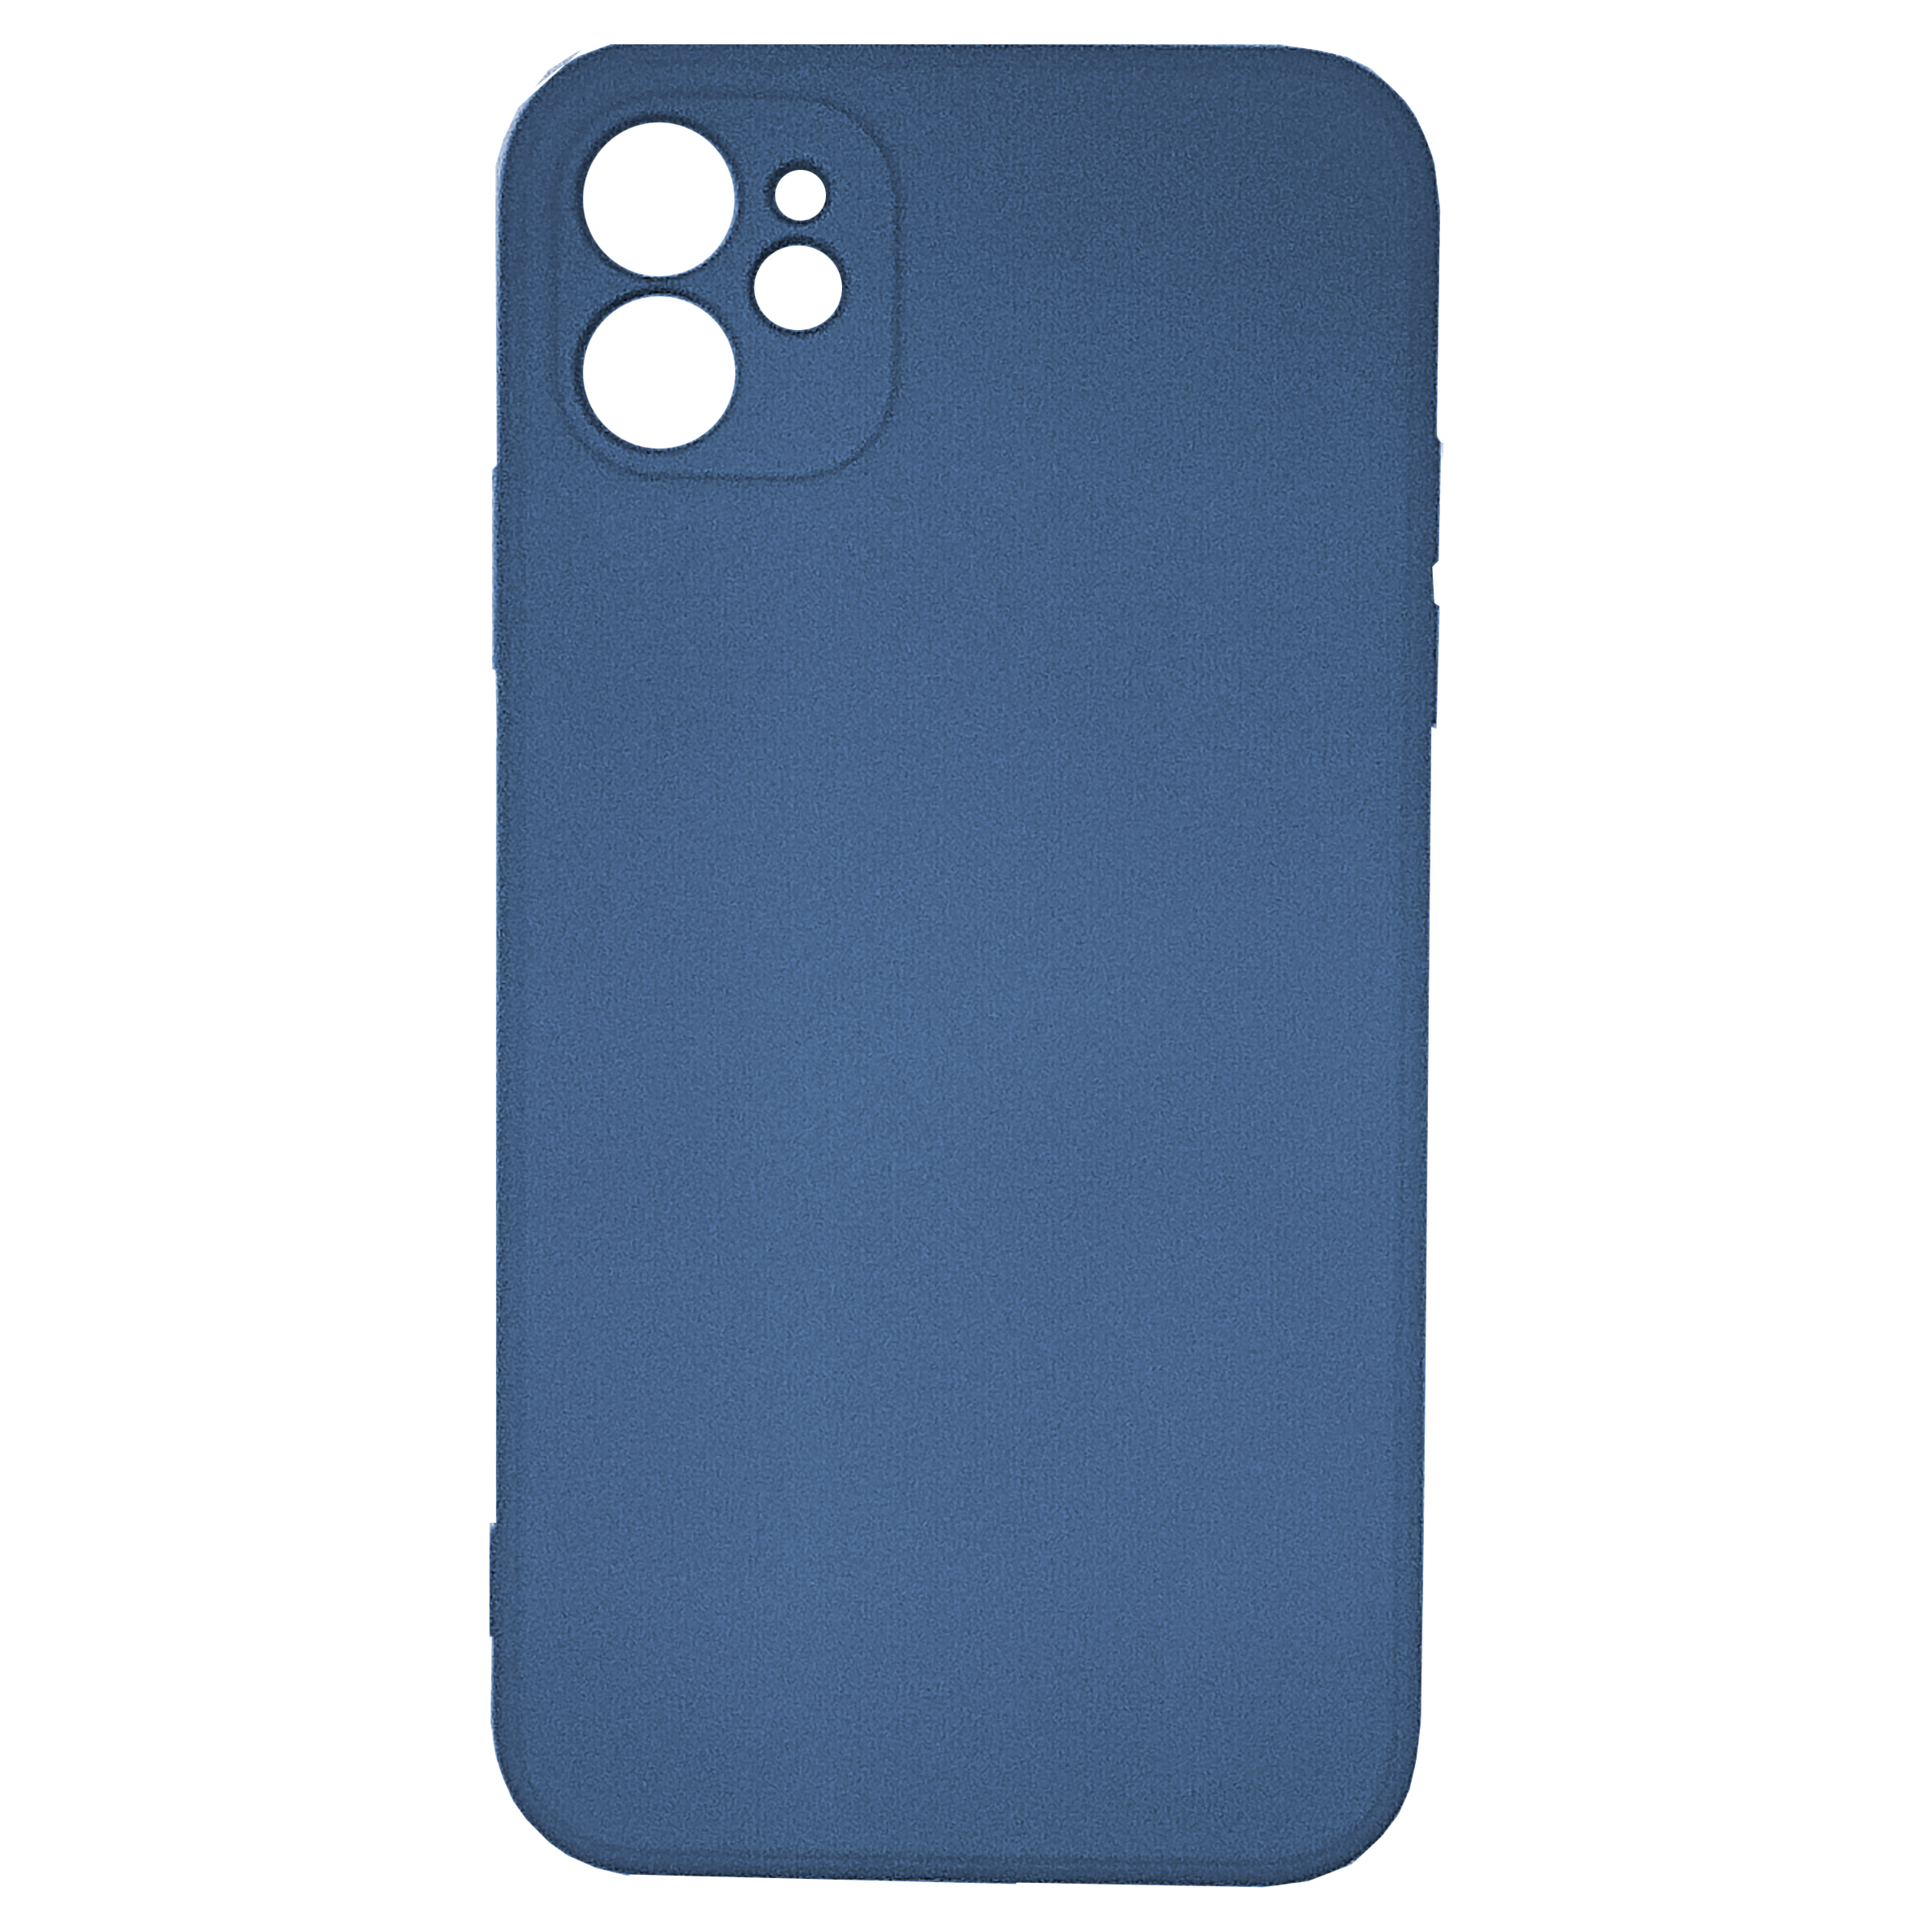 Soundrevo TPU Back Case For iPhone 11 (Anti-Slip, C011, Blue)